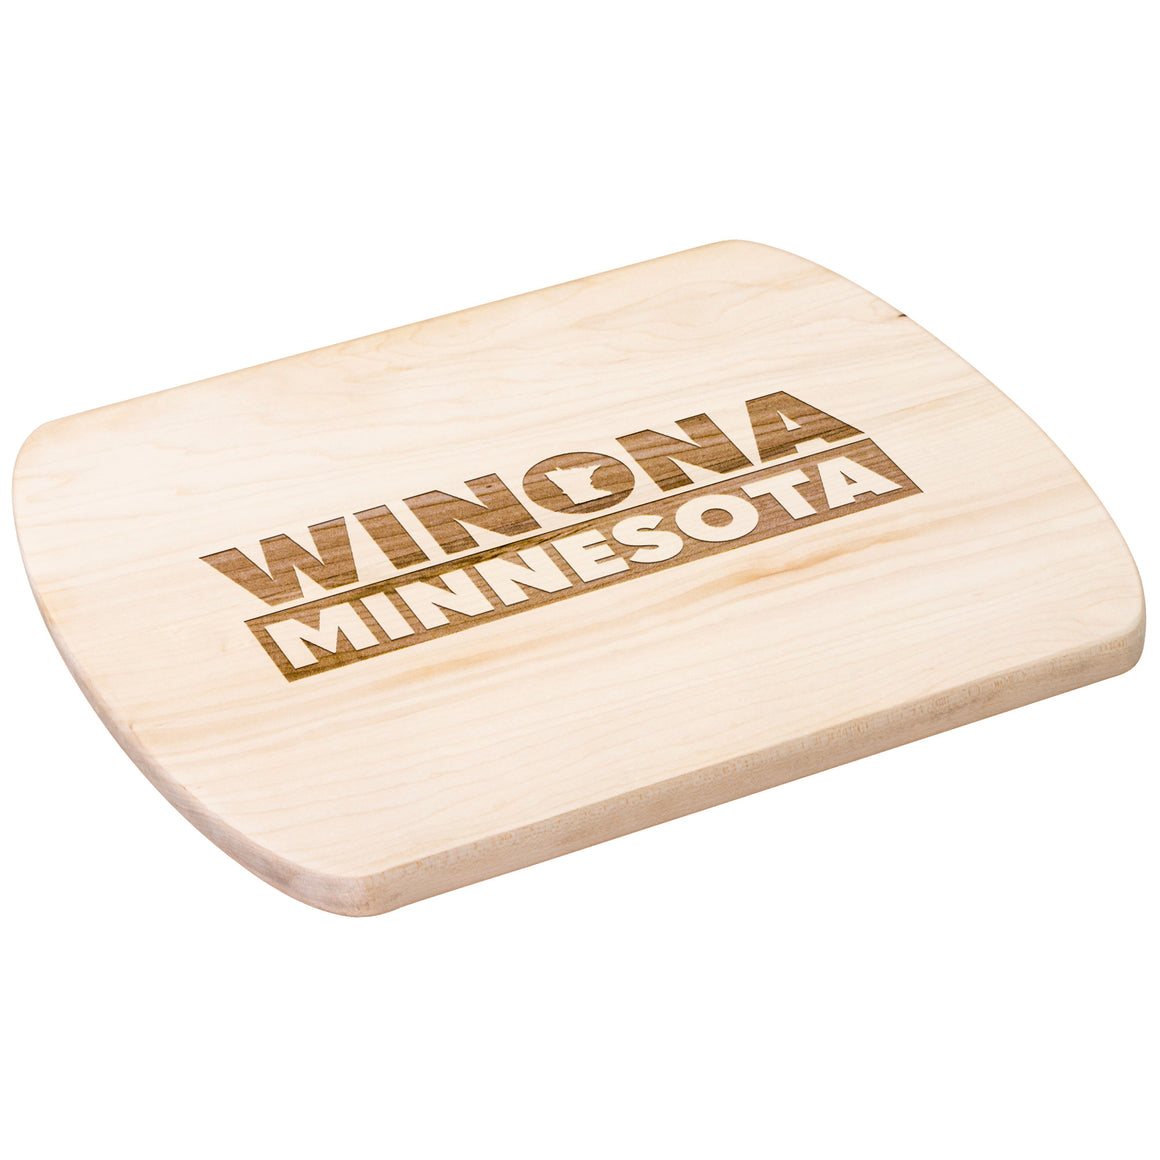 Winona Minnesota Cutting Board, State Shape in O, Maple